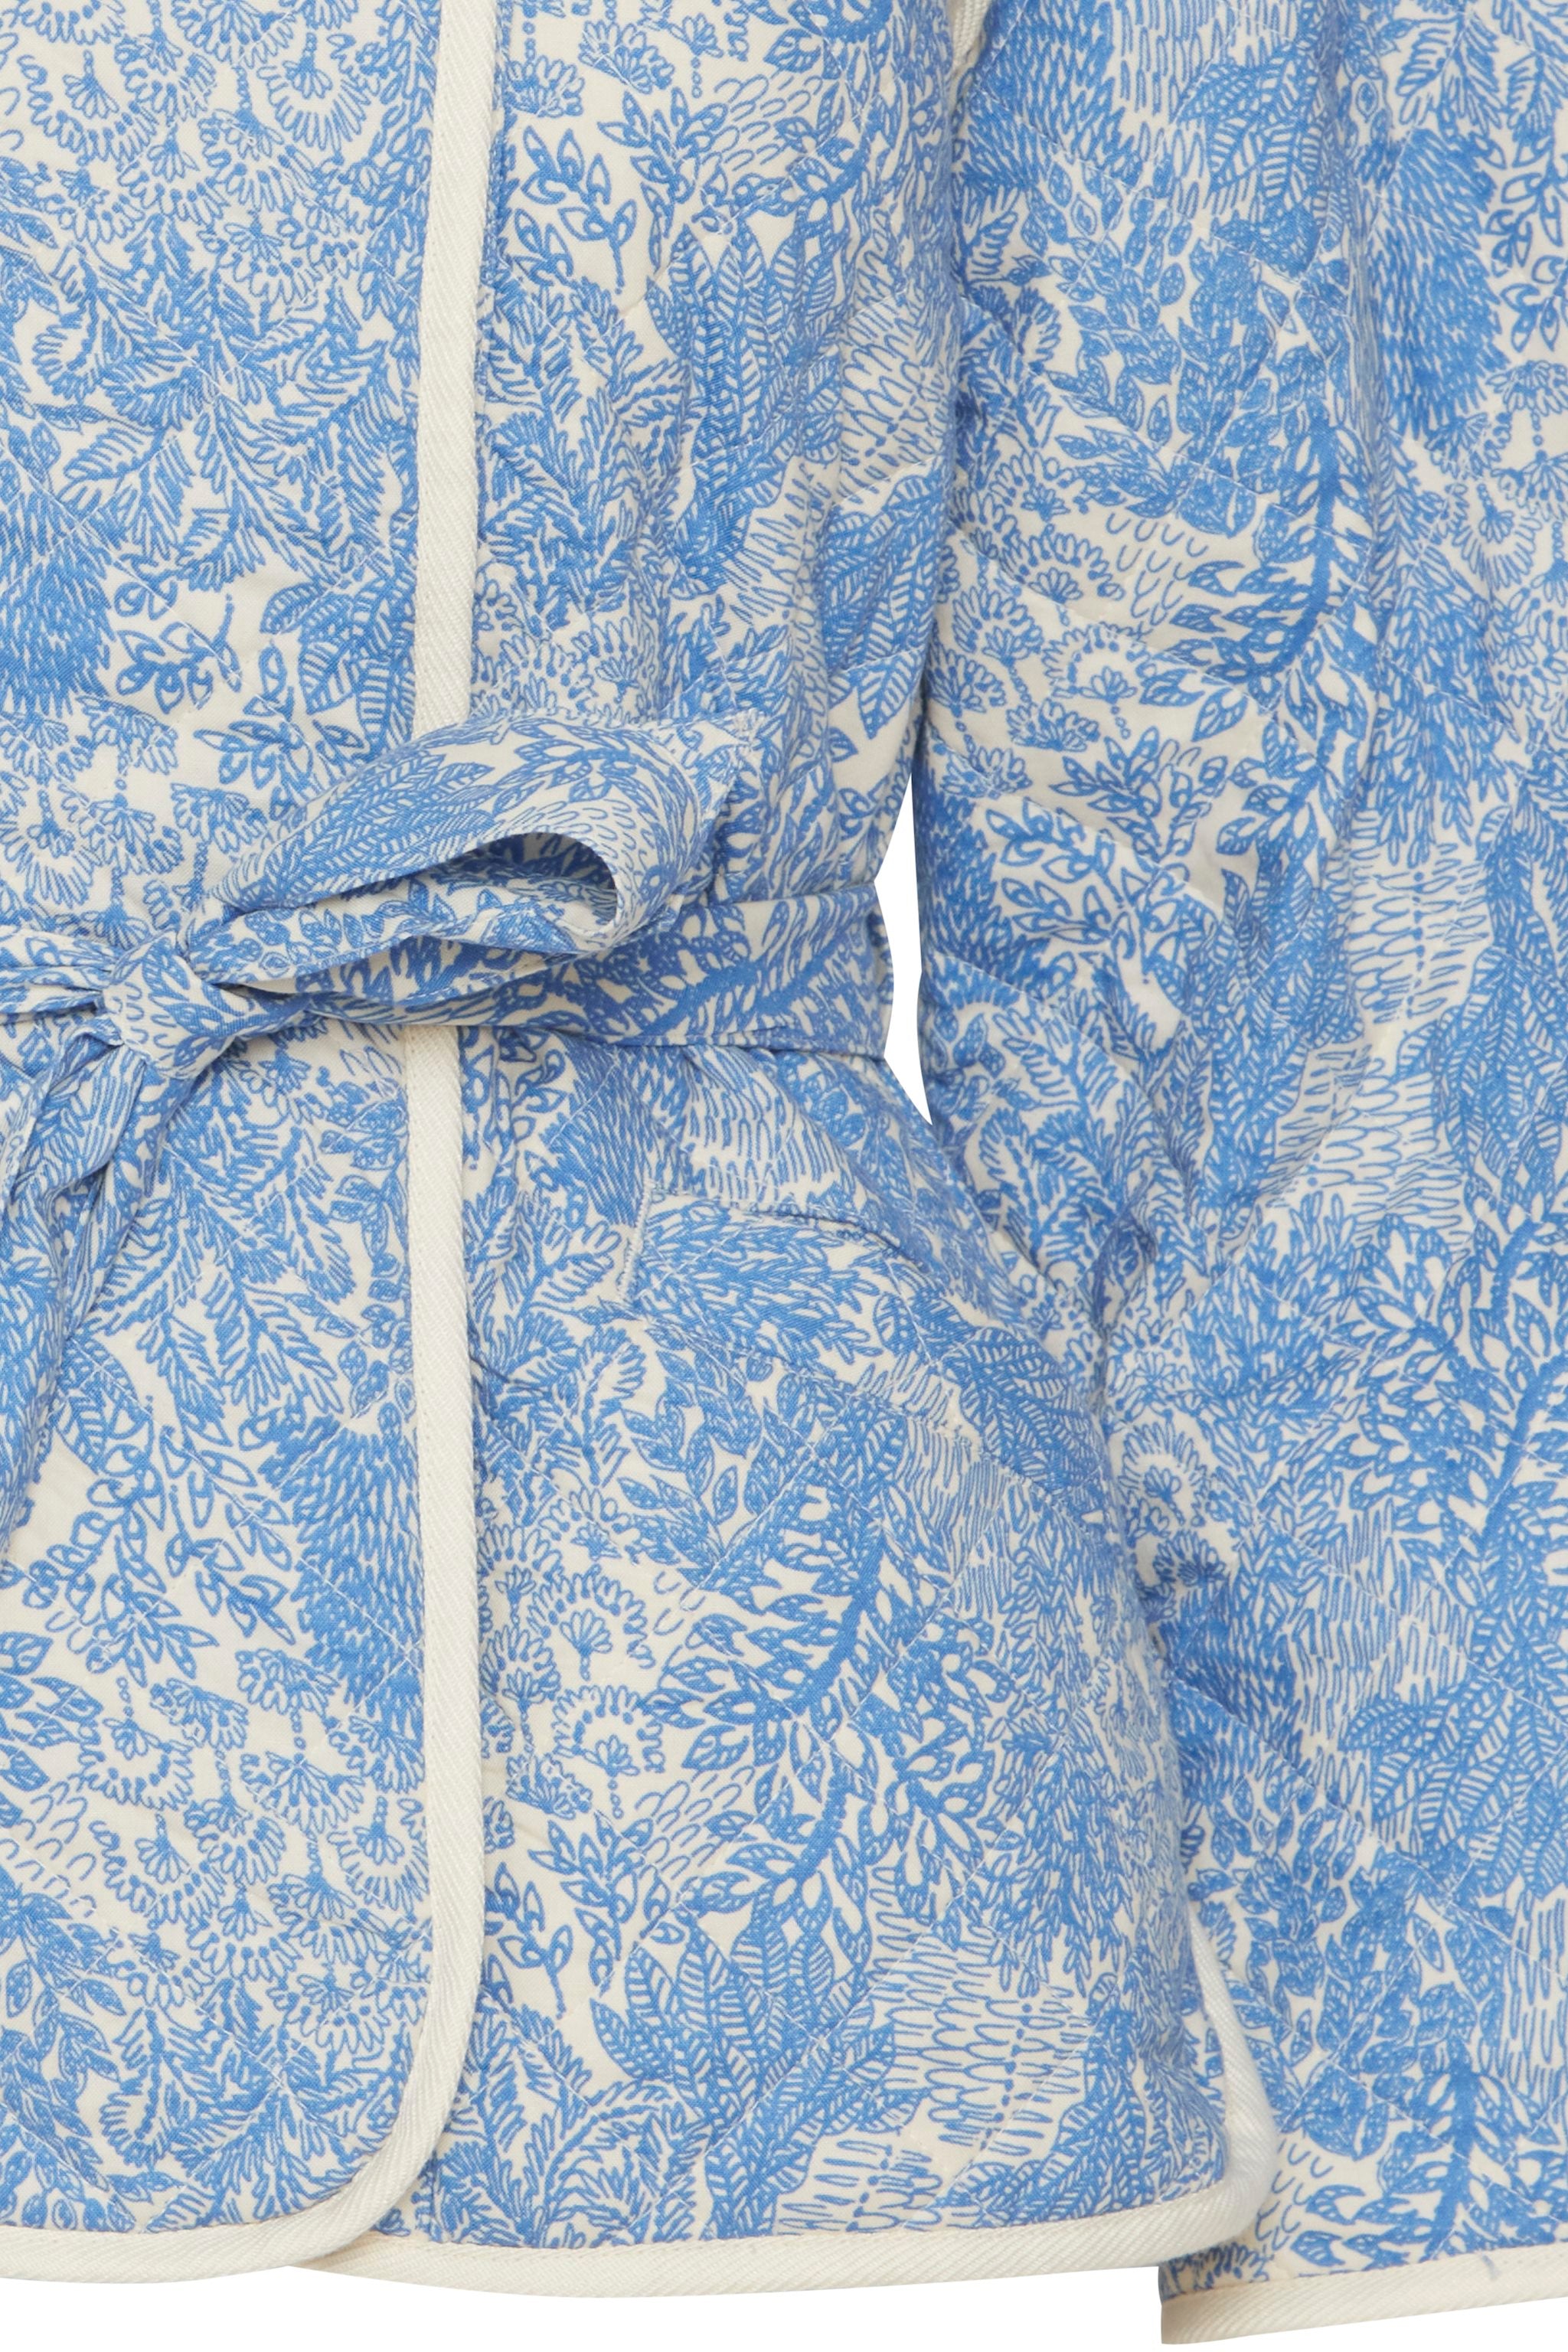 ATELIER RÊVE kimono Style Printed Casual Jacket - Doodle Flower Print